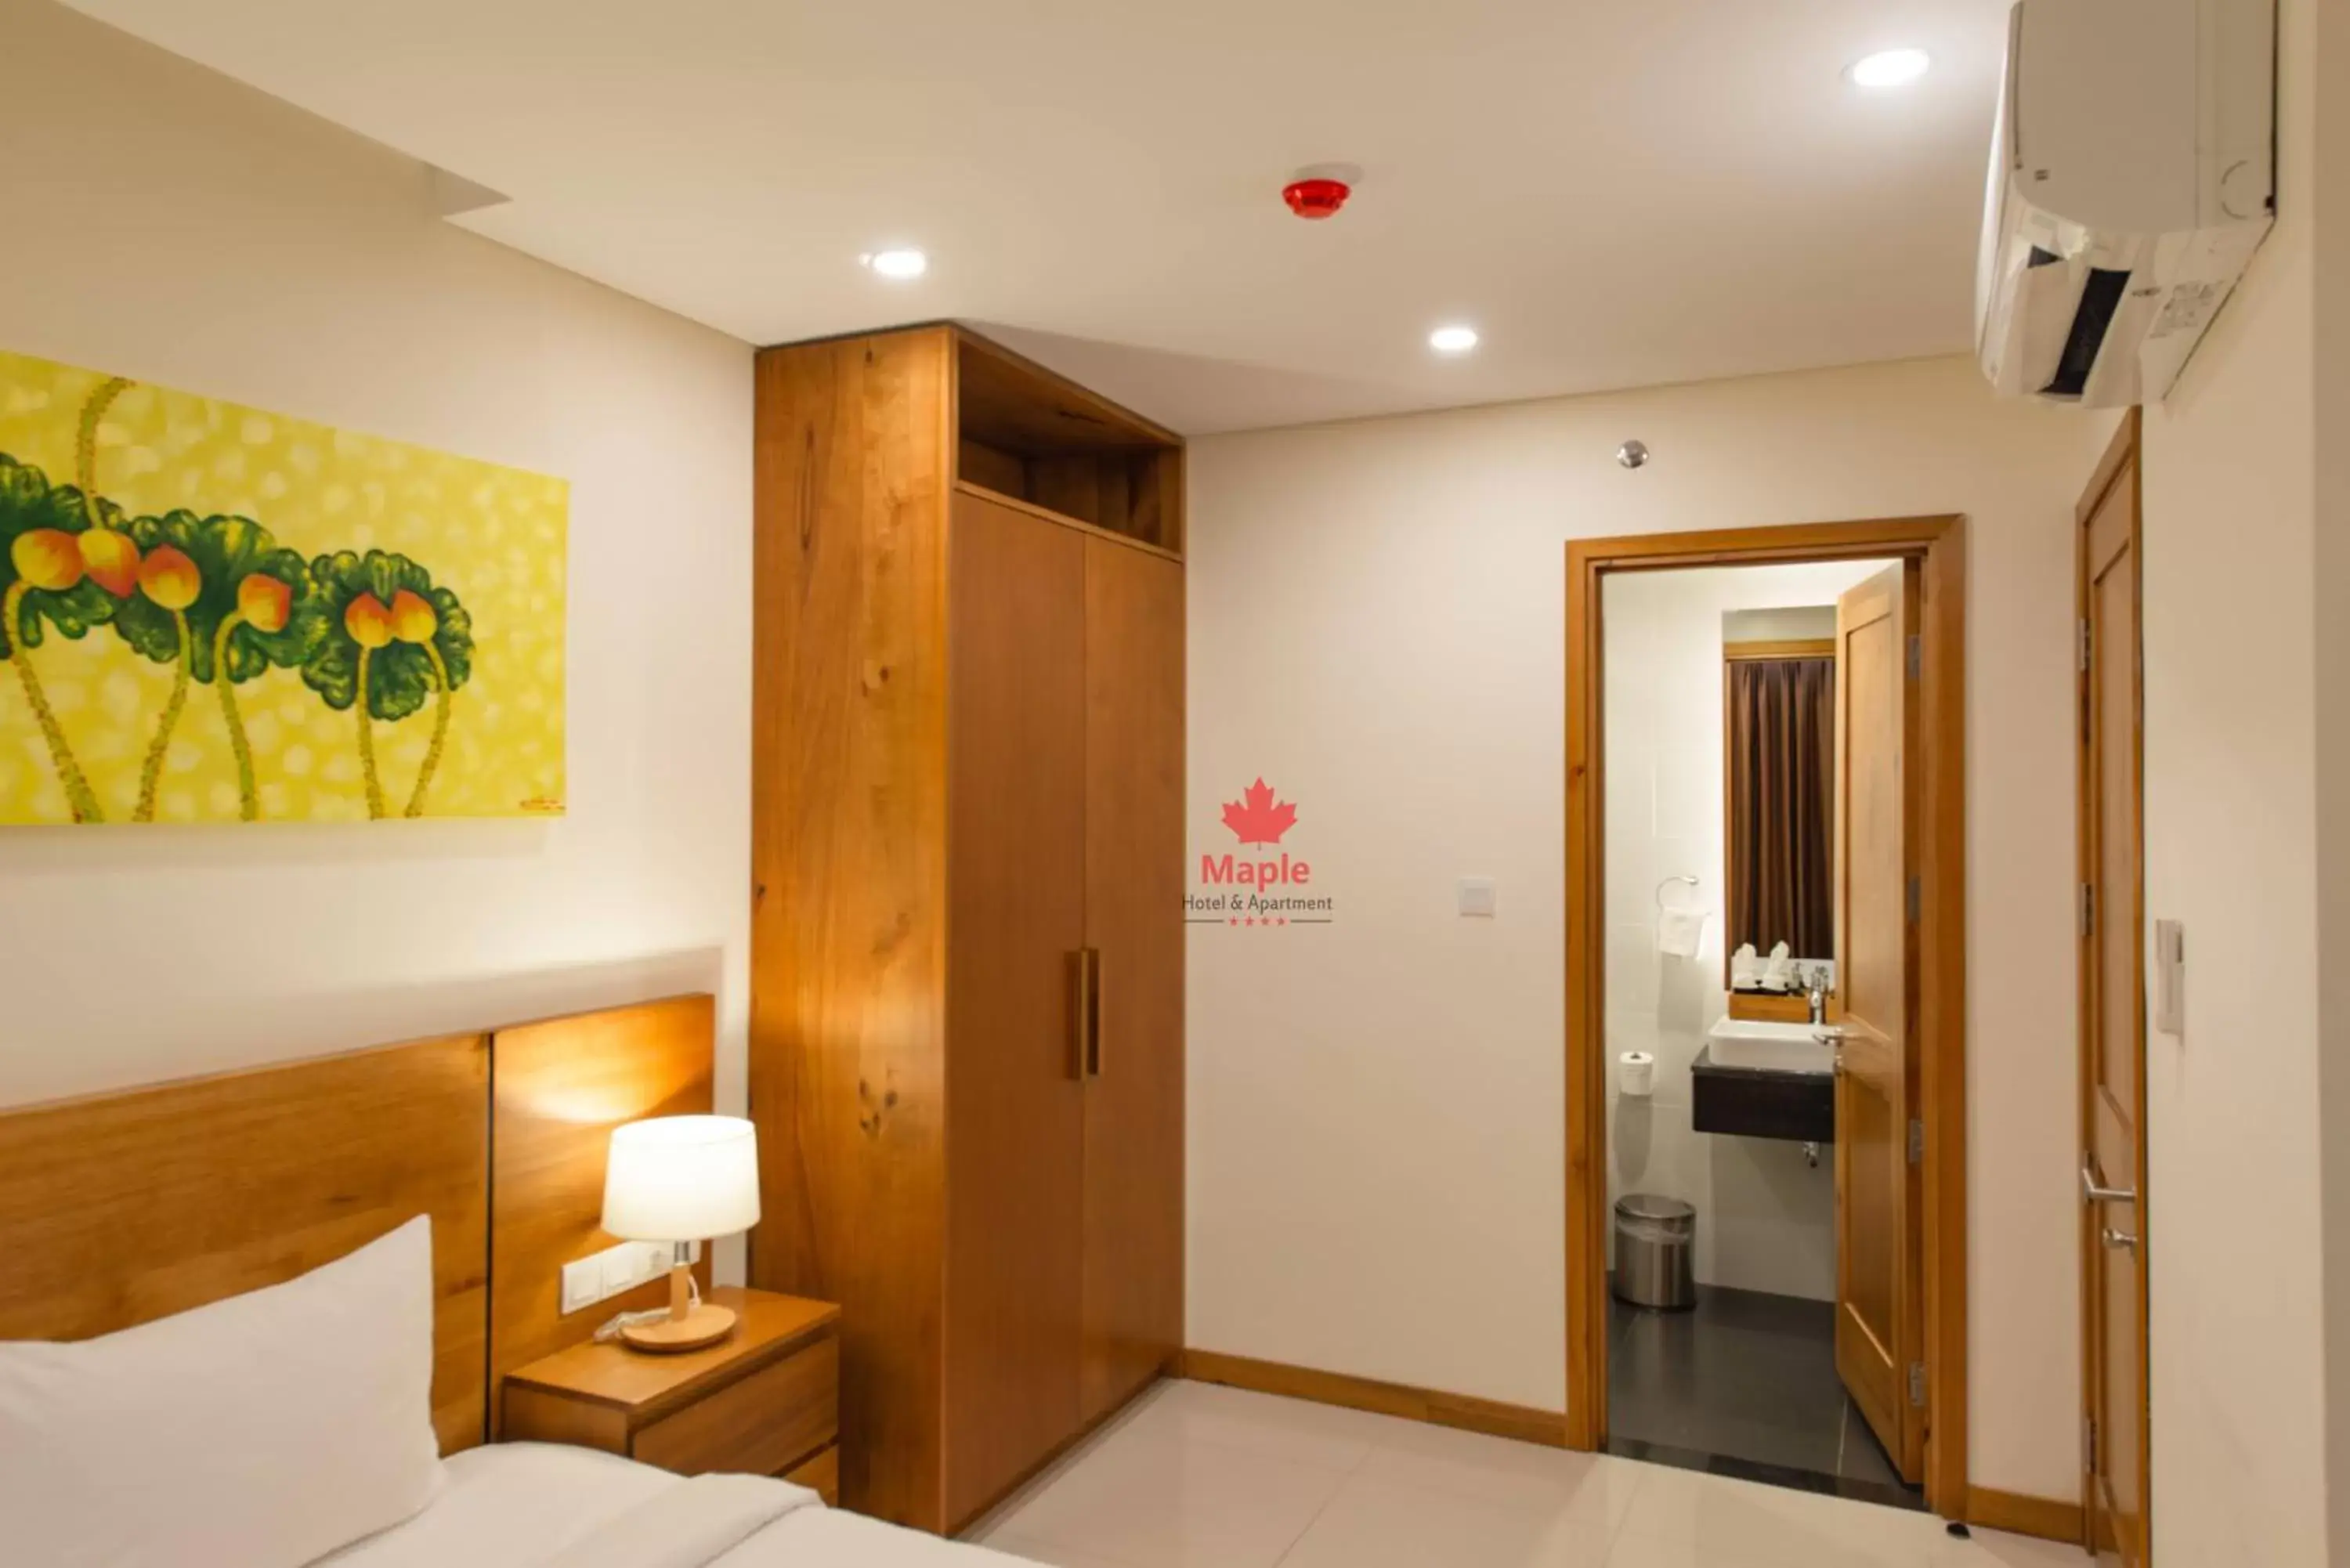 Bedroom in Maple Hotel & Apartment